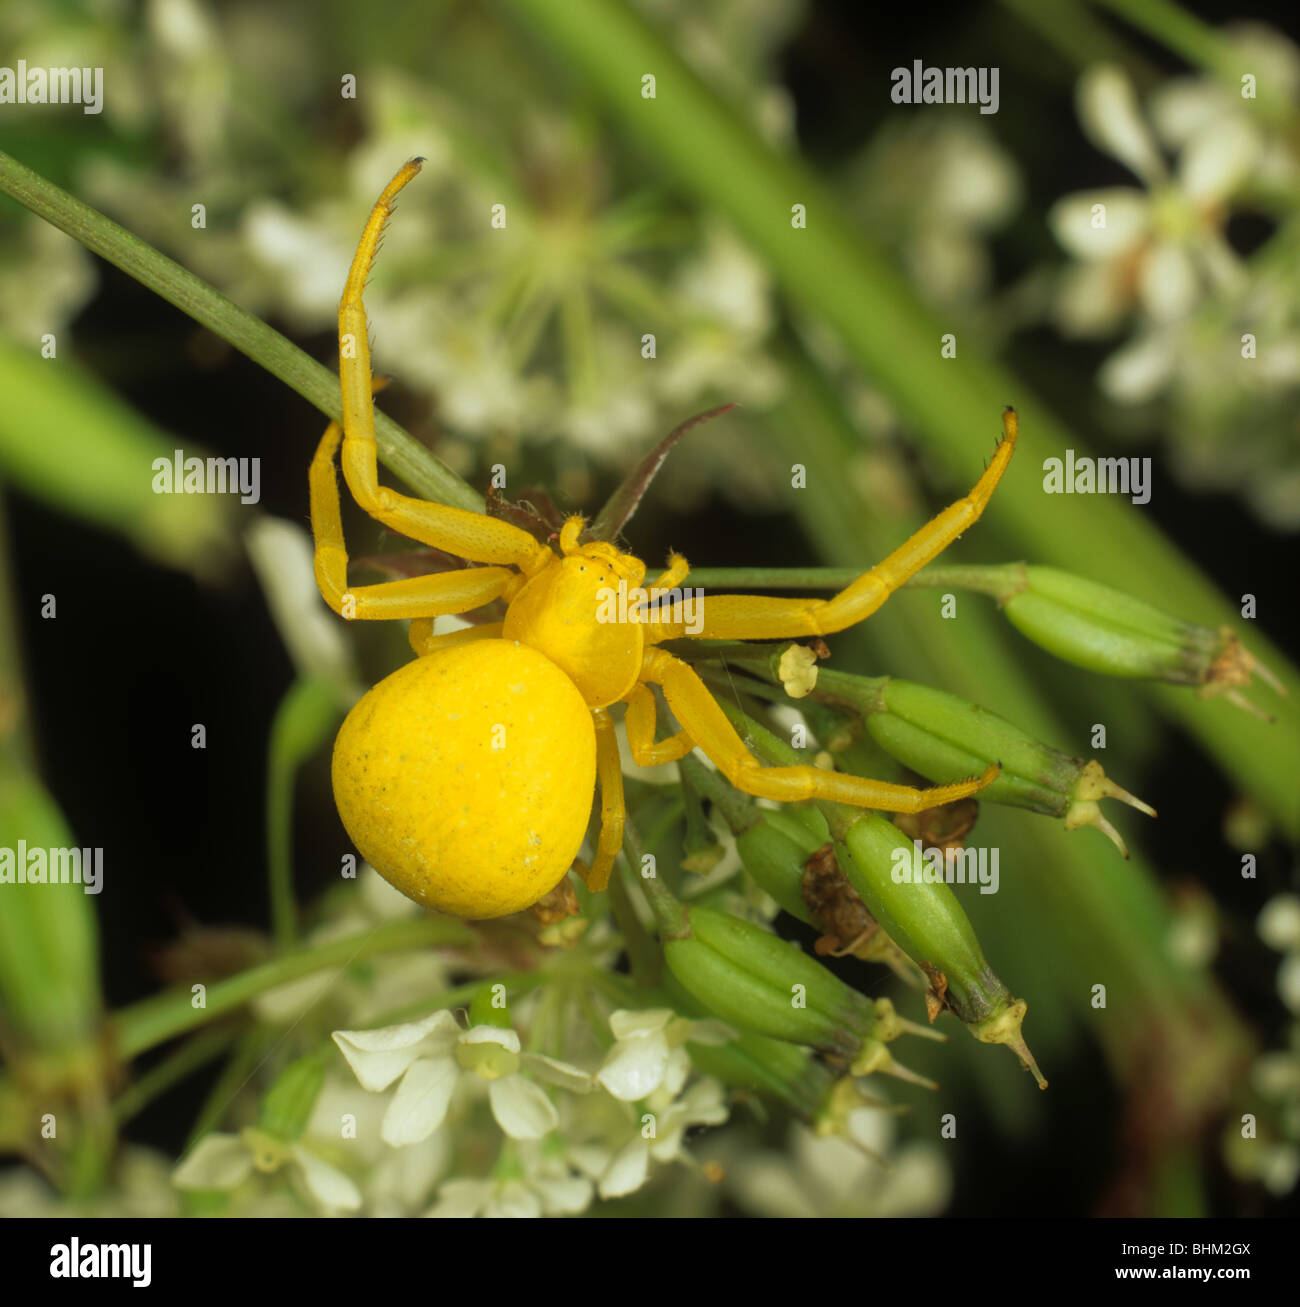 Goldenrod crab spider (Misumena vatia) waiting for prey in a umbellifer flower Stock Photo